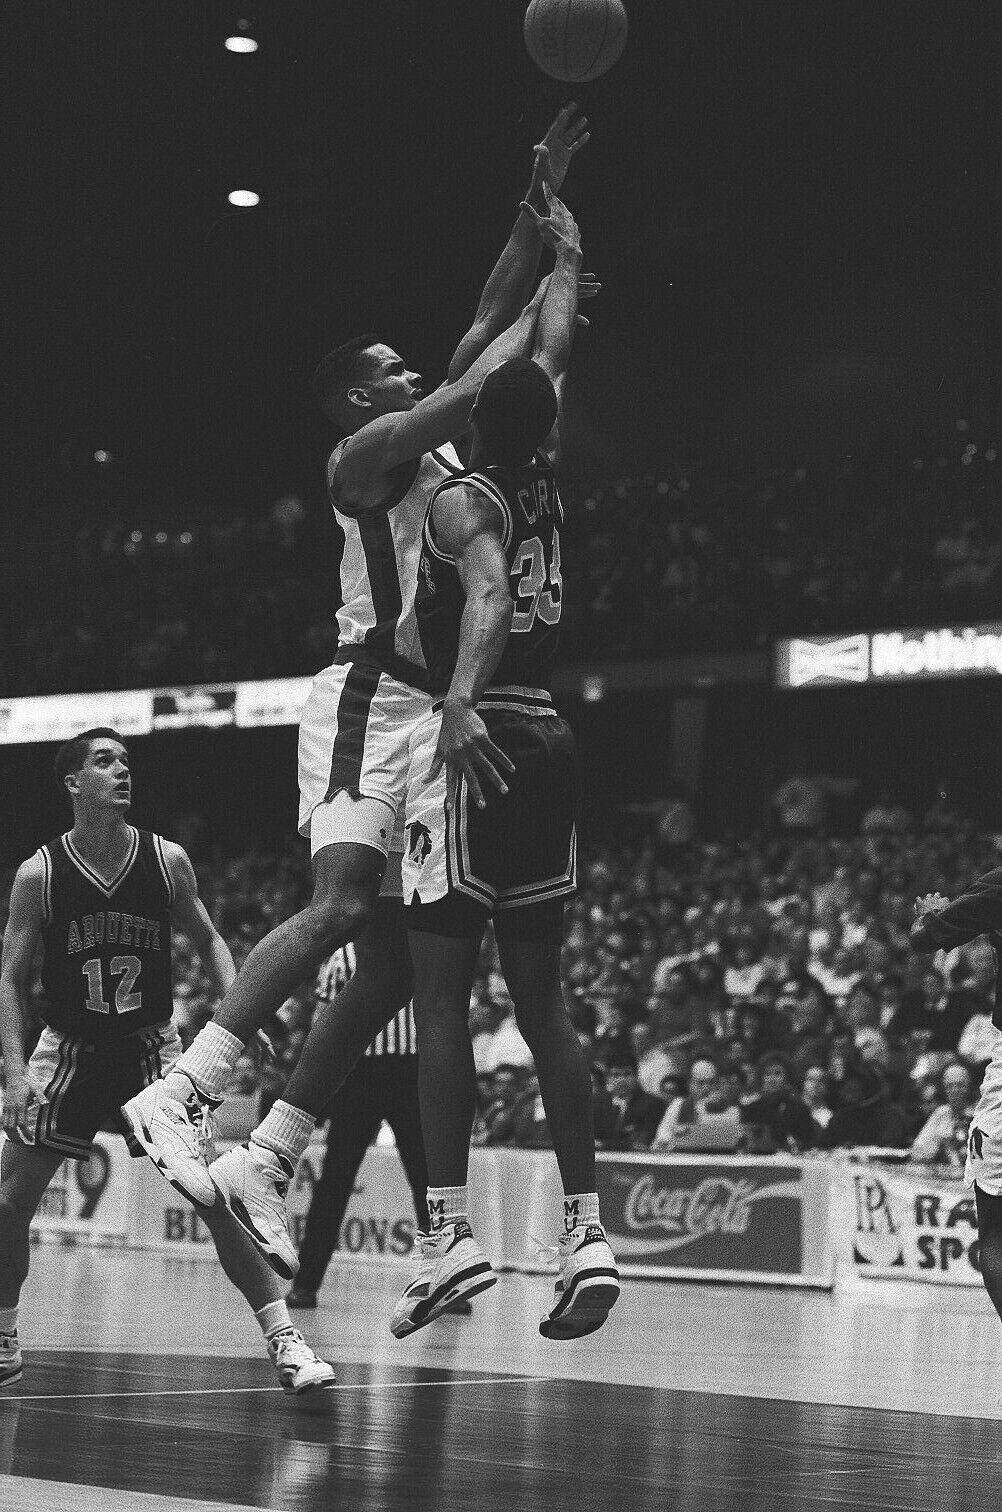 LD126-15 1992 College Basketball DePaul Marquette (140) ORIG 35mm B&W NEGATIVES Без бренда - фотография #12